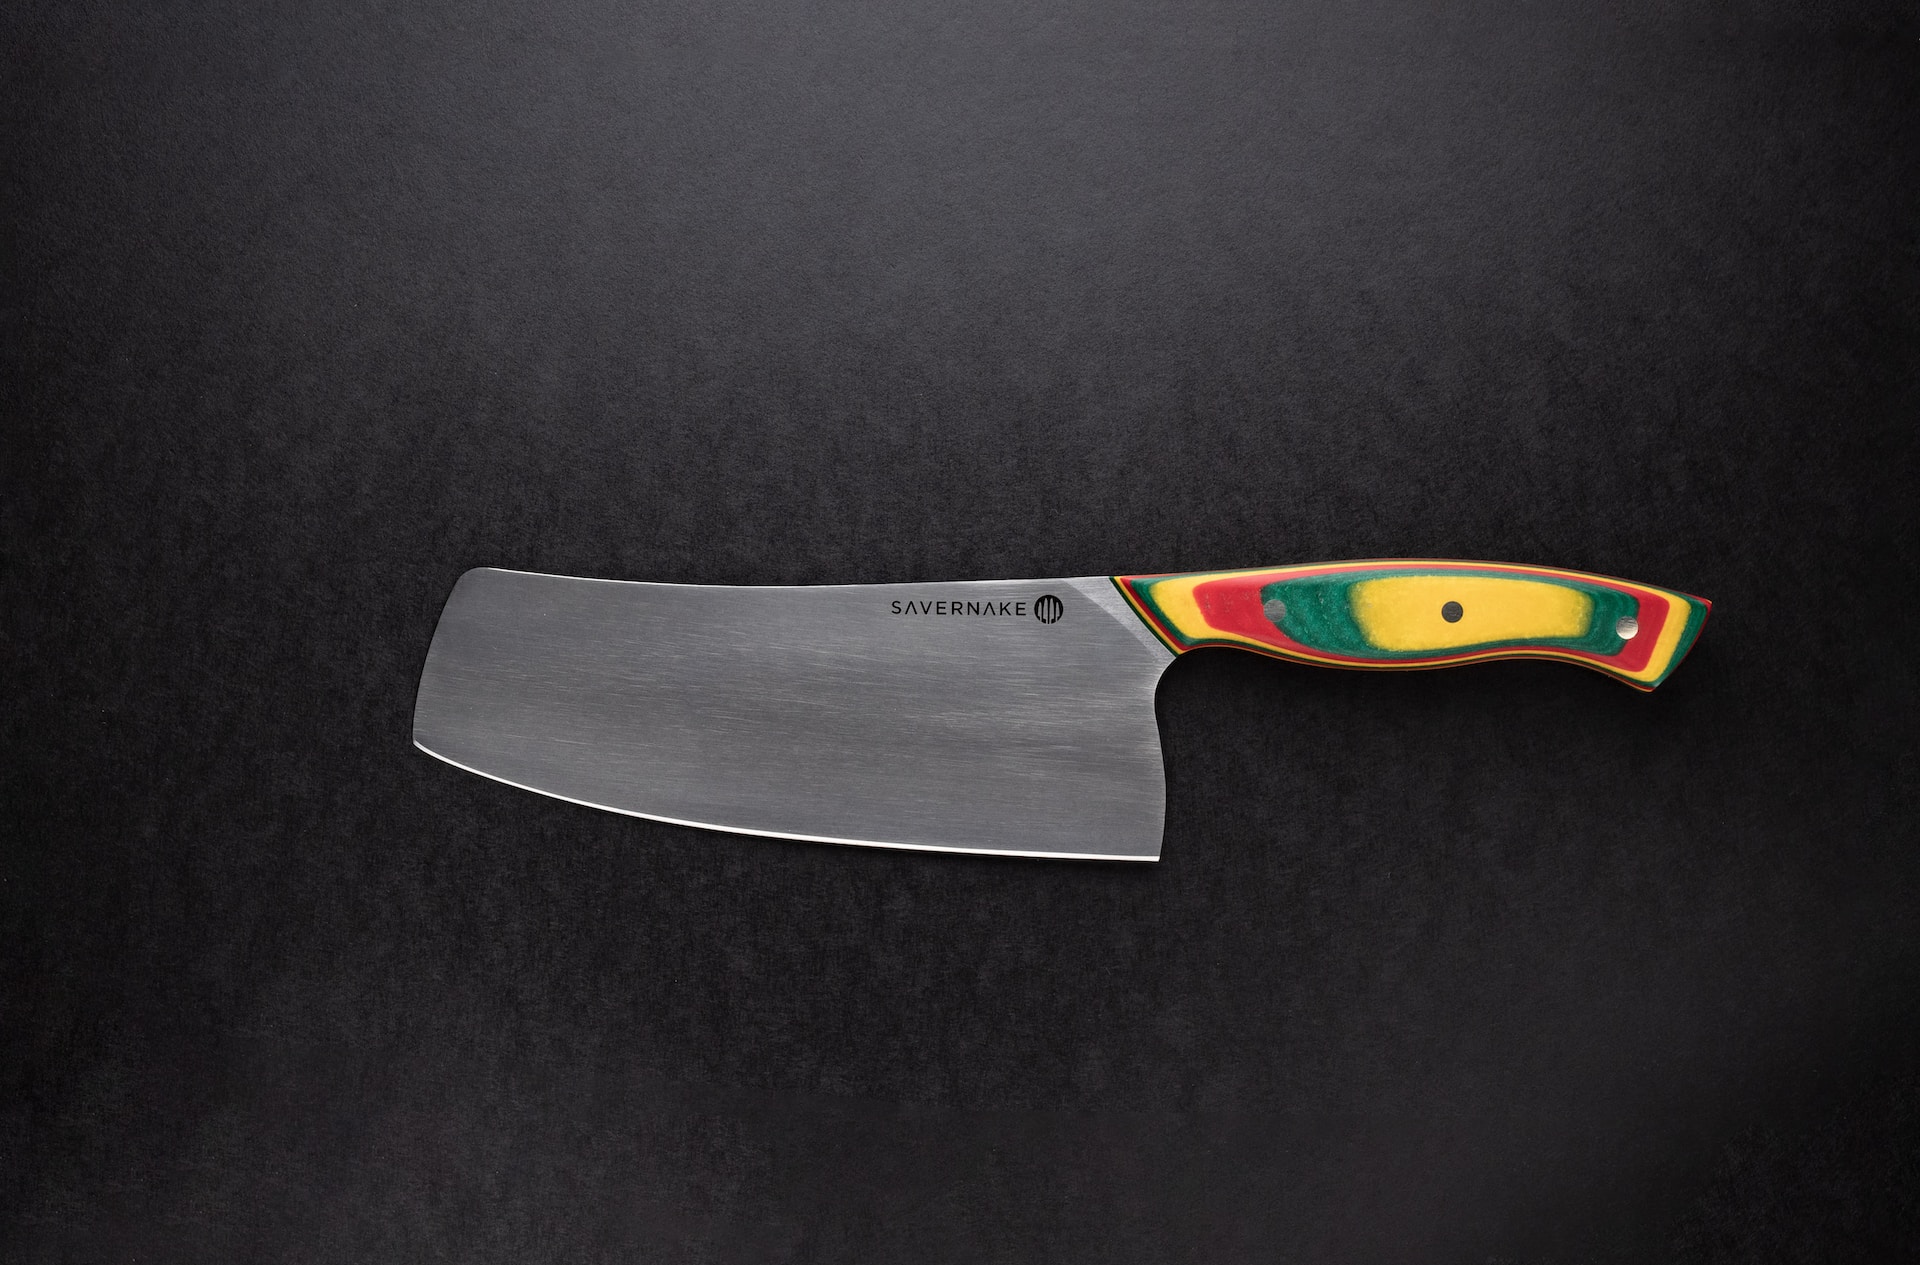 Нож для разделки мяса с цветной рукояткой.